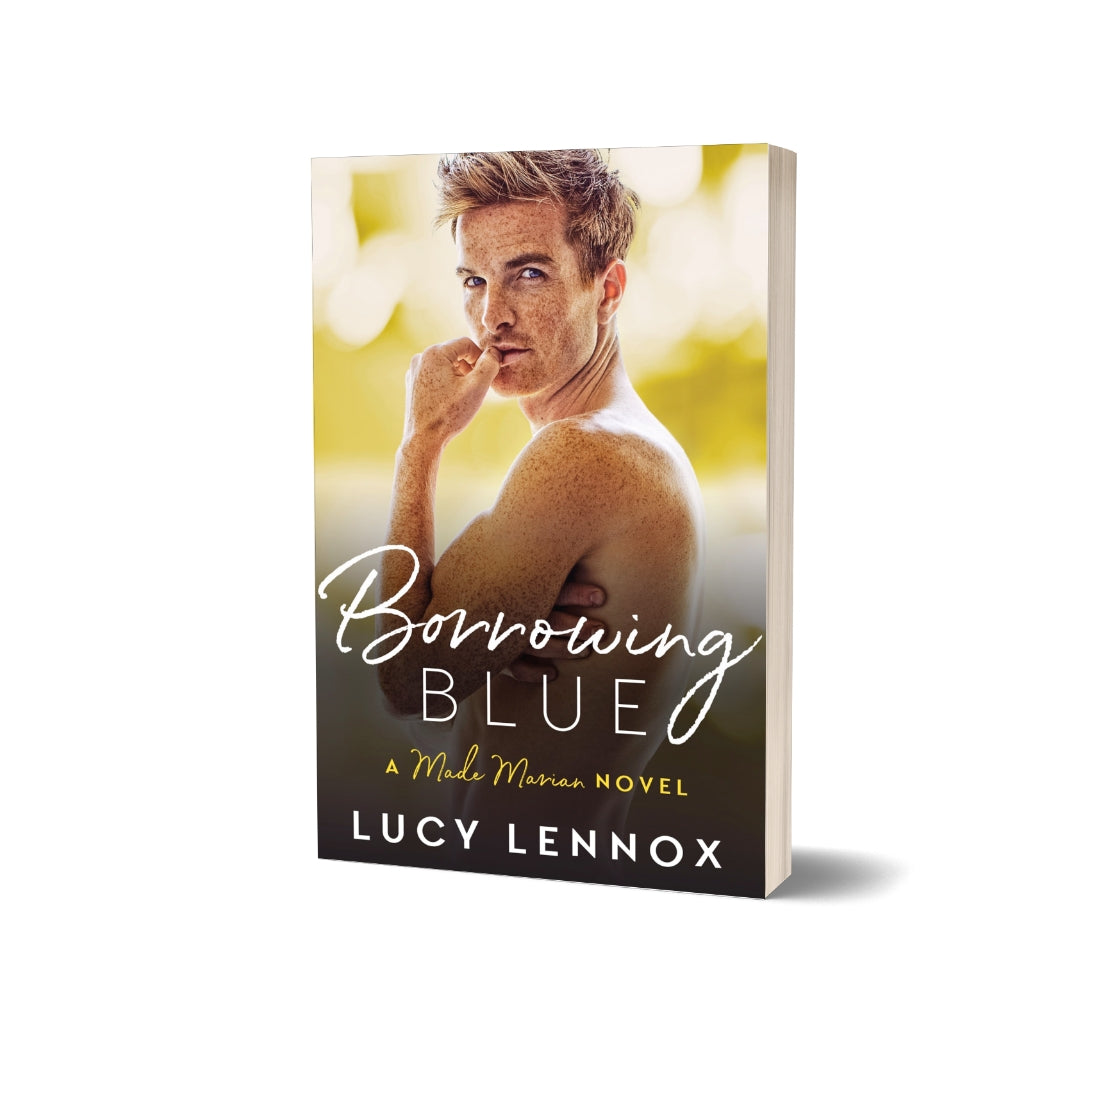 Borrowing-Blue (Paperback) gay romance novel